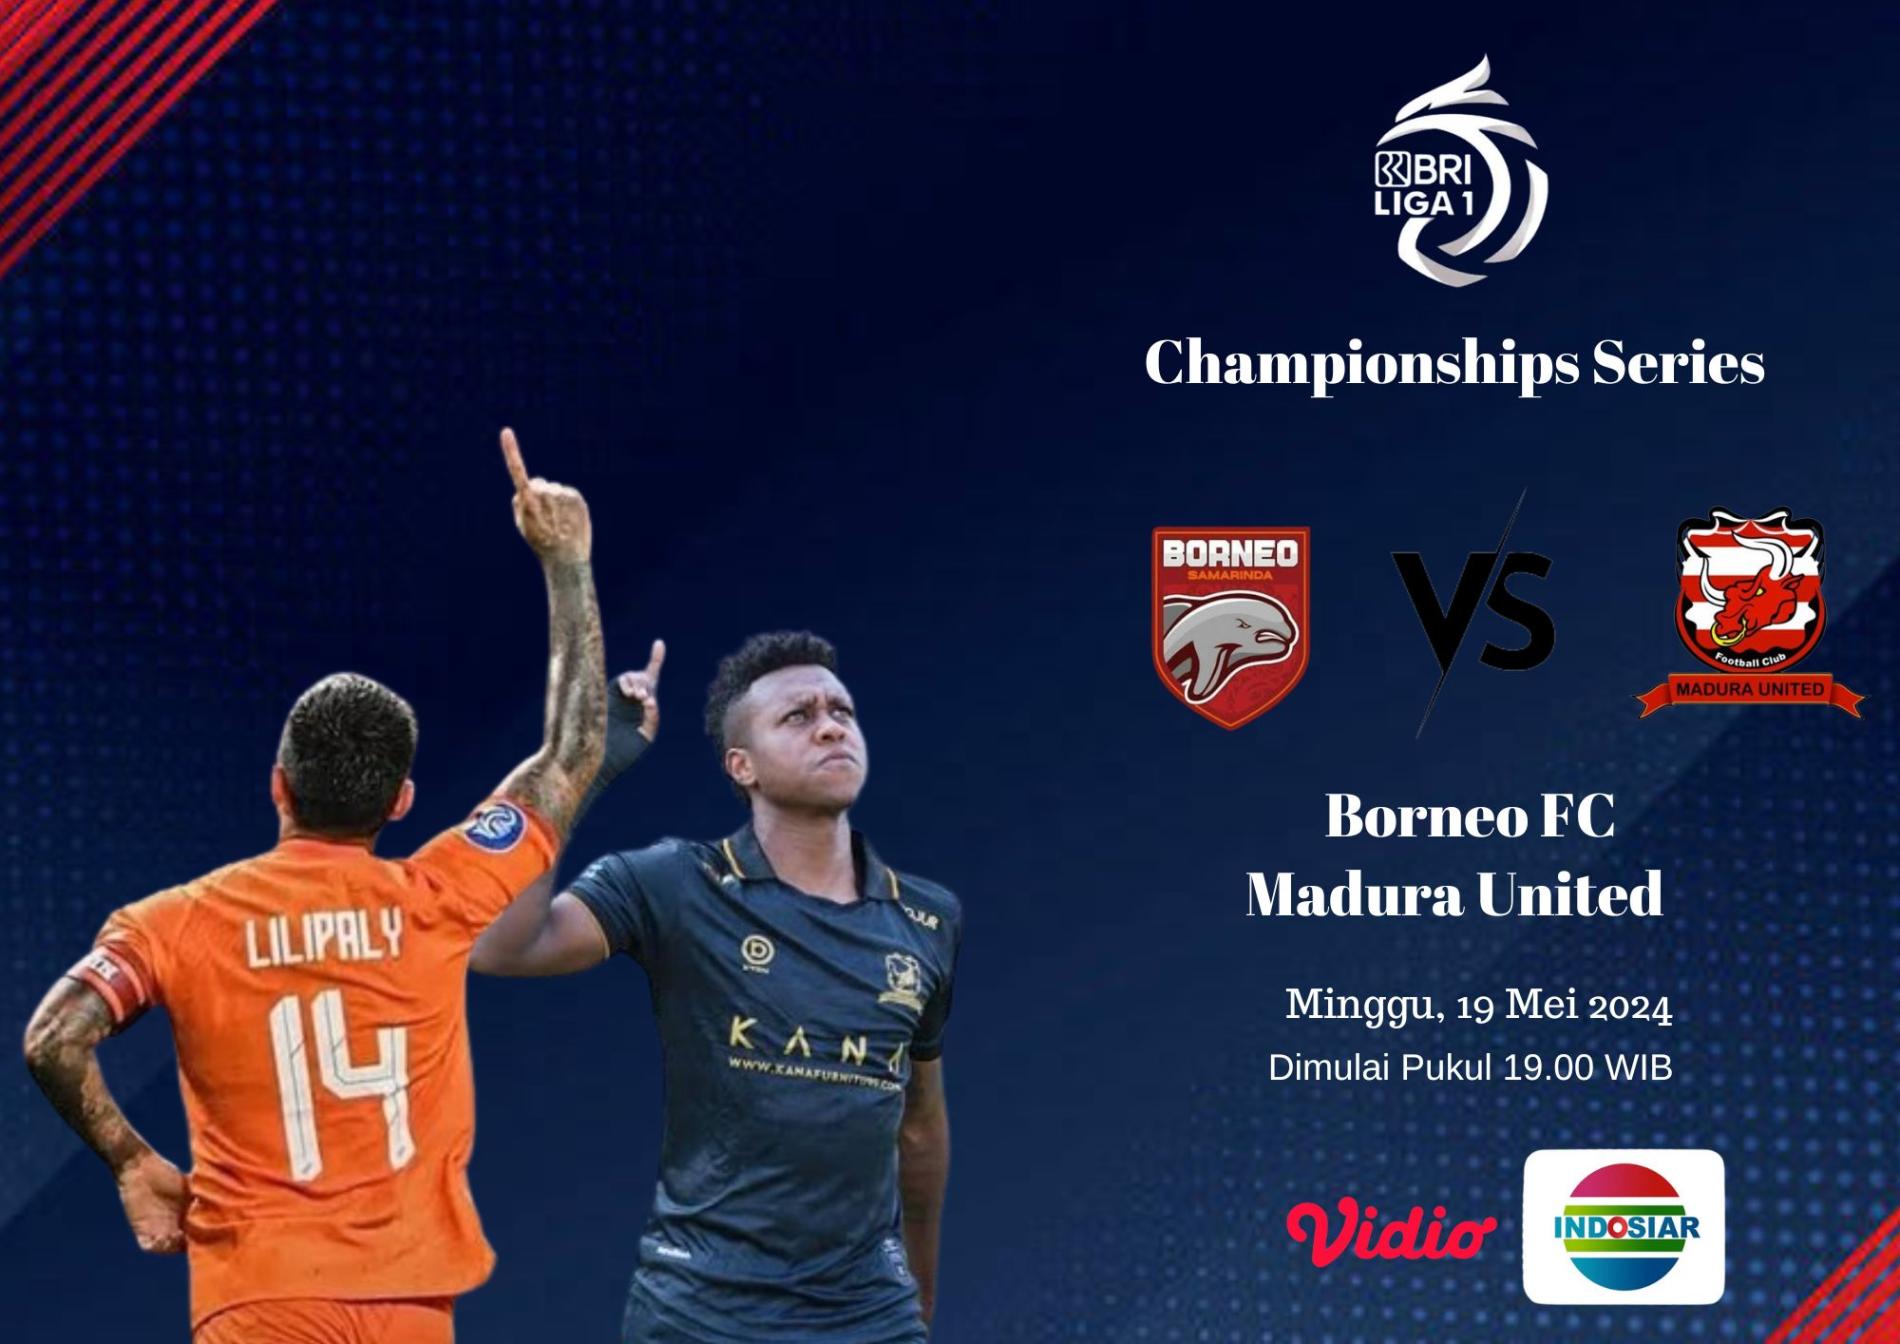 Borneo FC vs Madura united